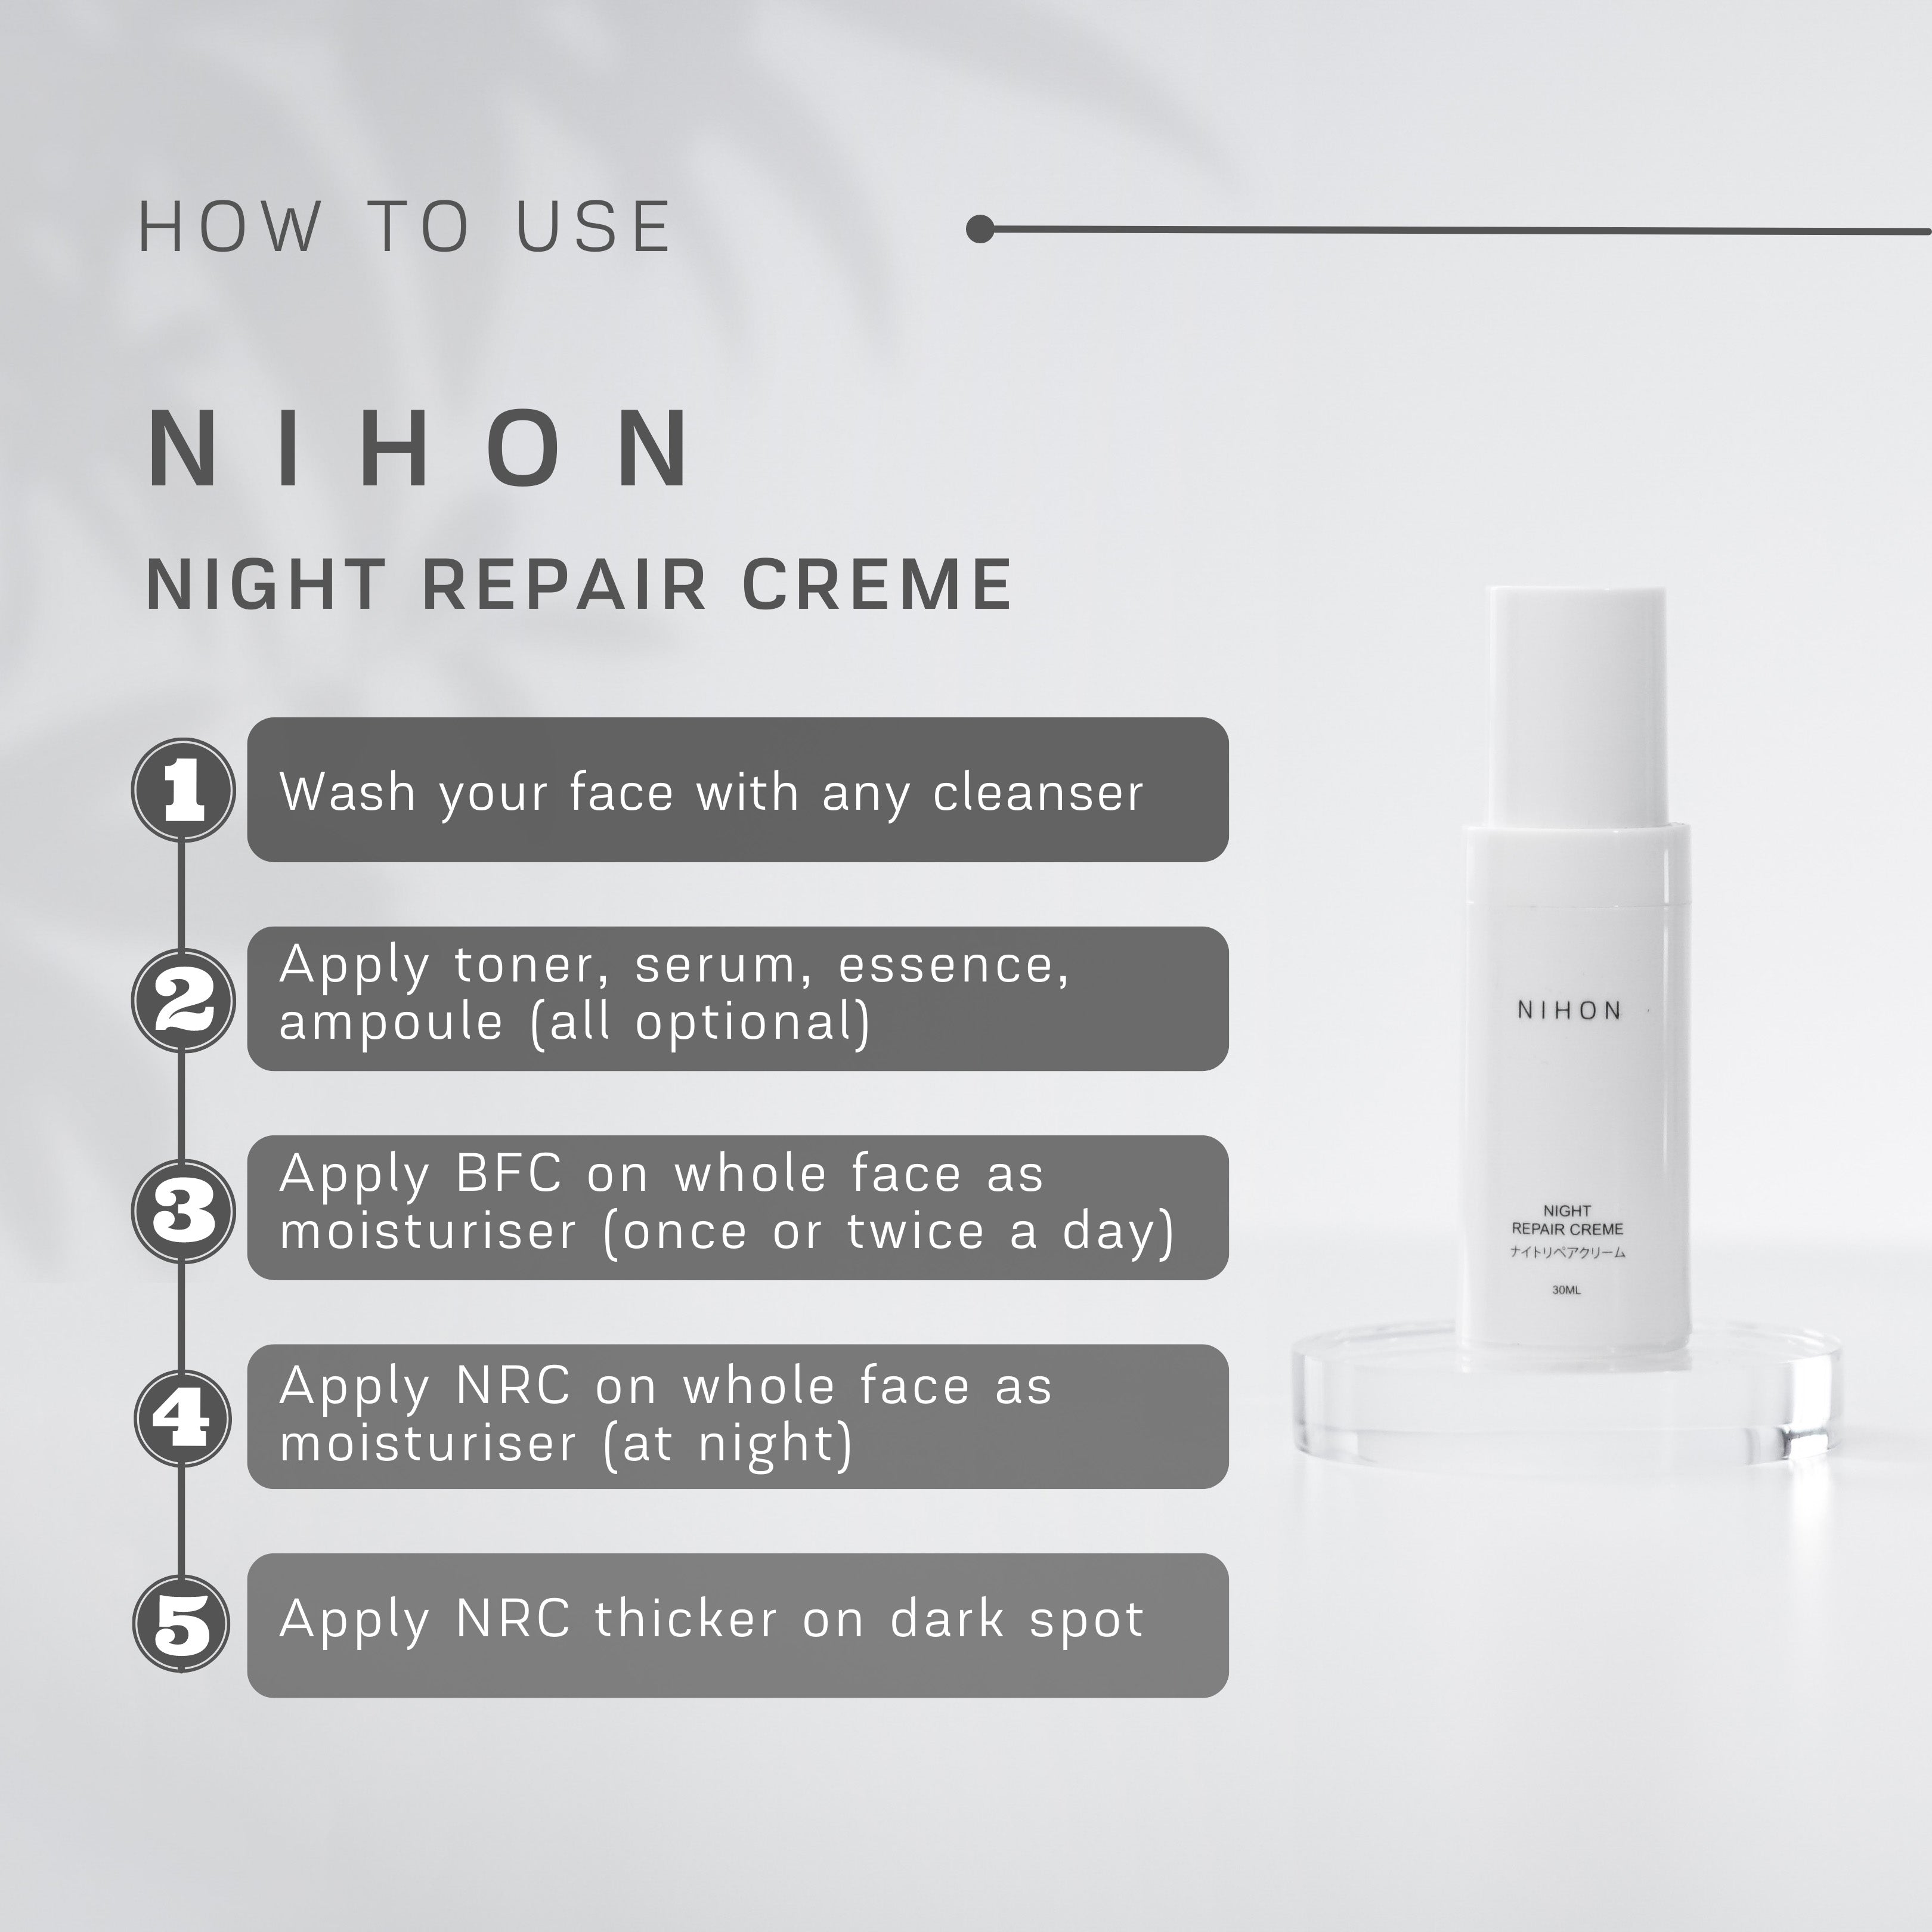 How to use Nihon Night Repair Creme